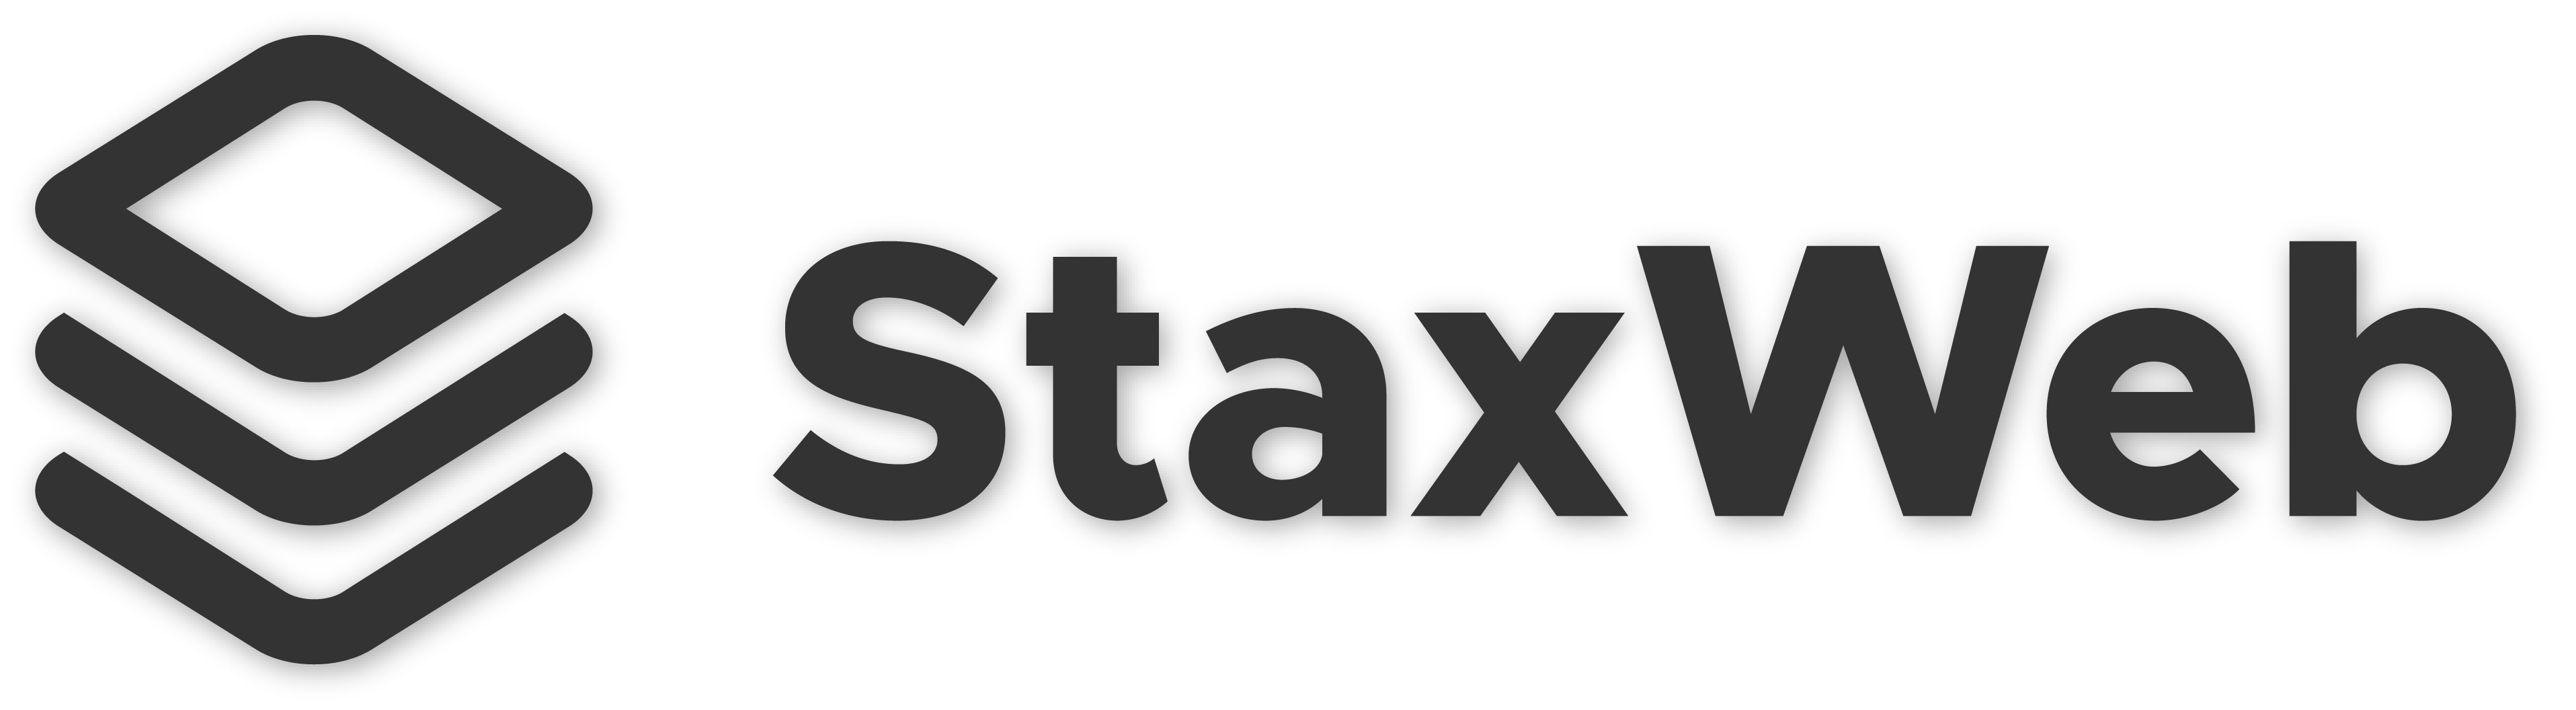 StaxWeb.com